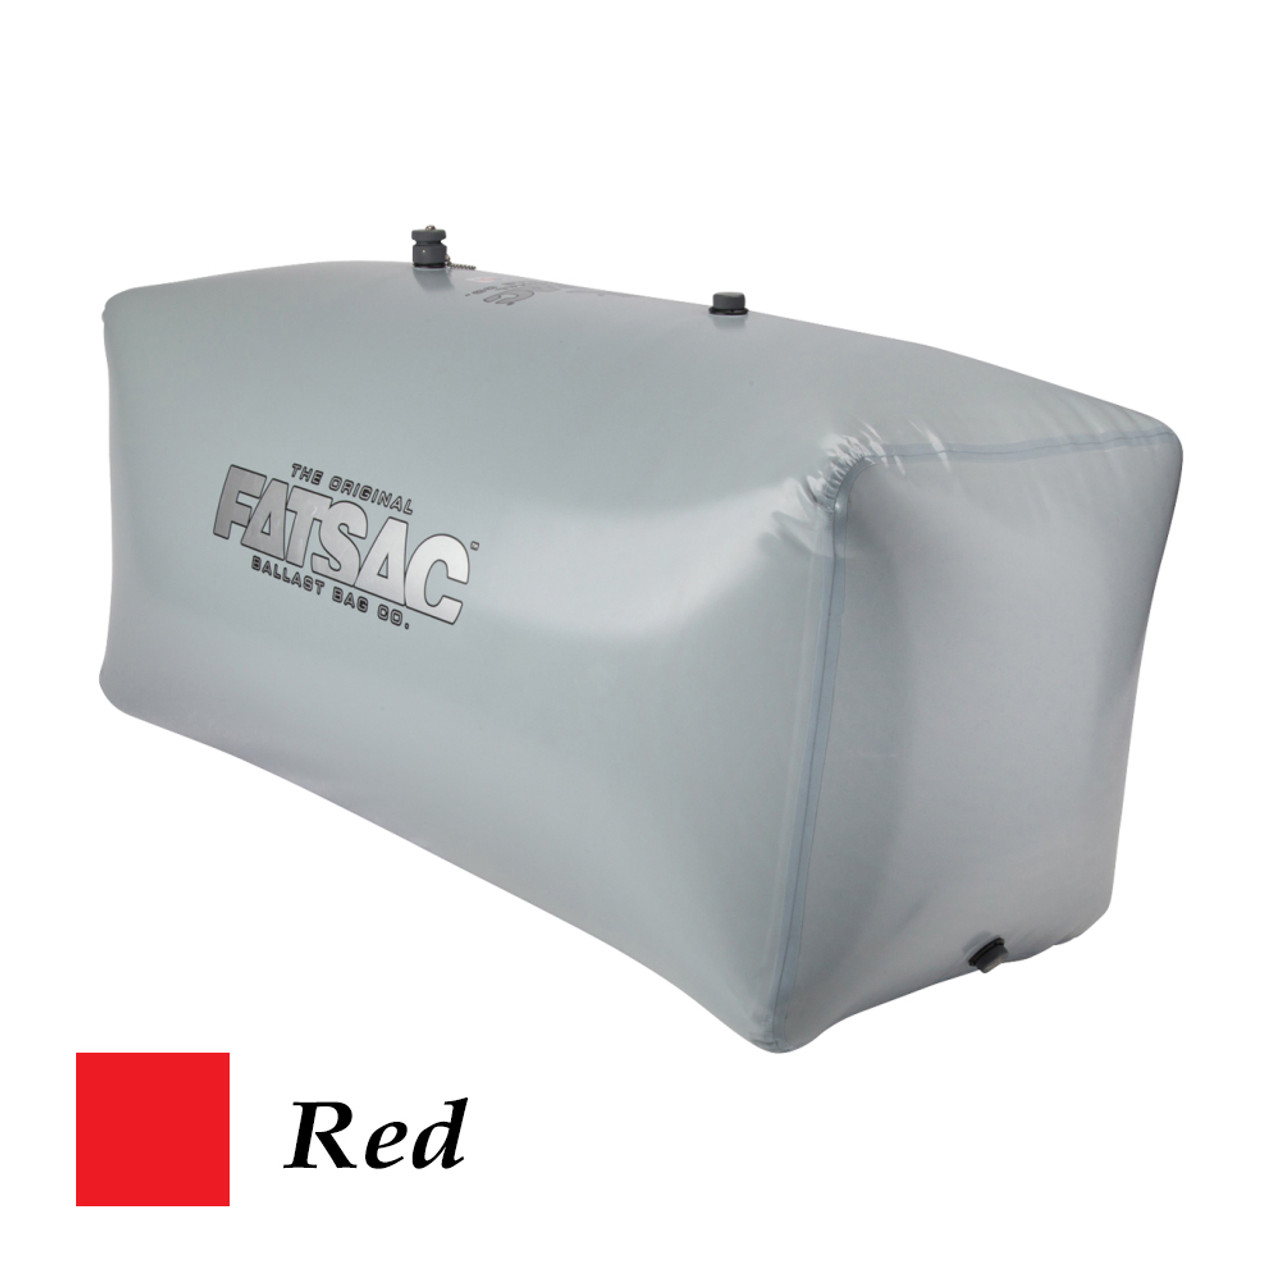 FATSAC Jumbo V-Drive Wakesurf Fat Sac Ballast Bag - 1100lbs - Red [W719-RED]